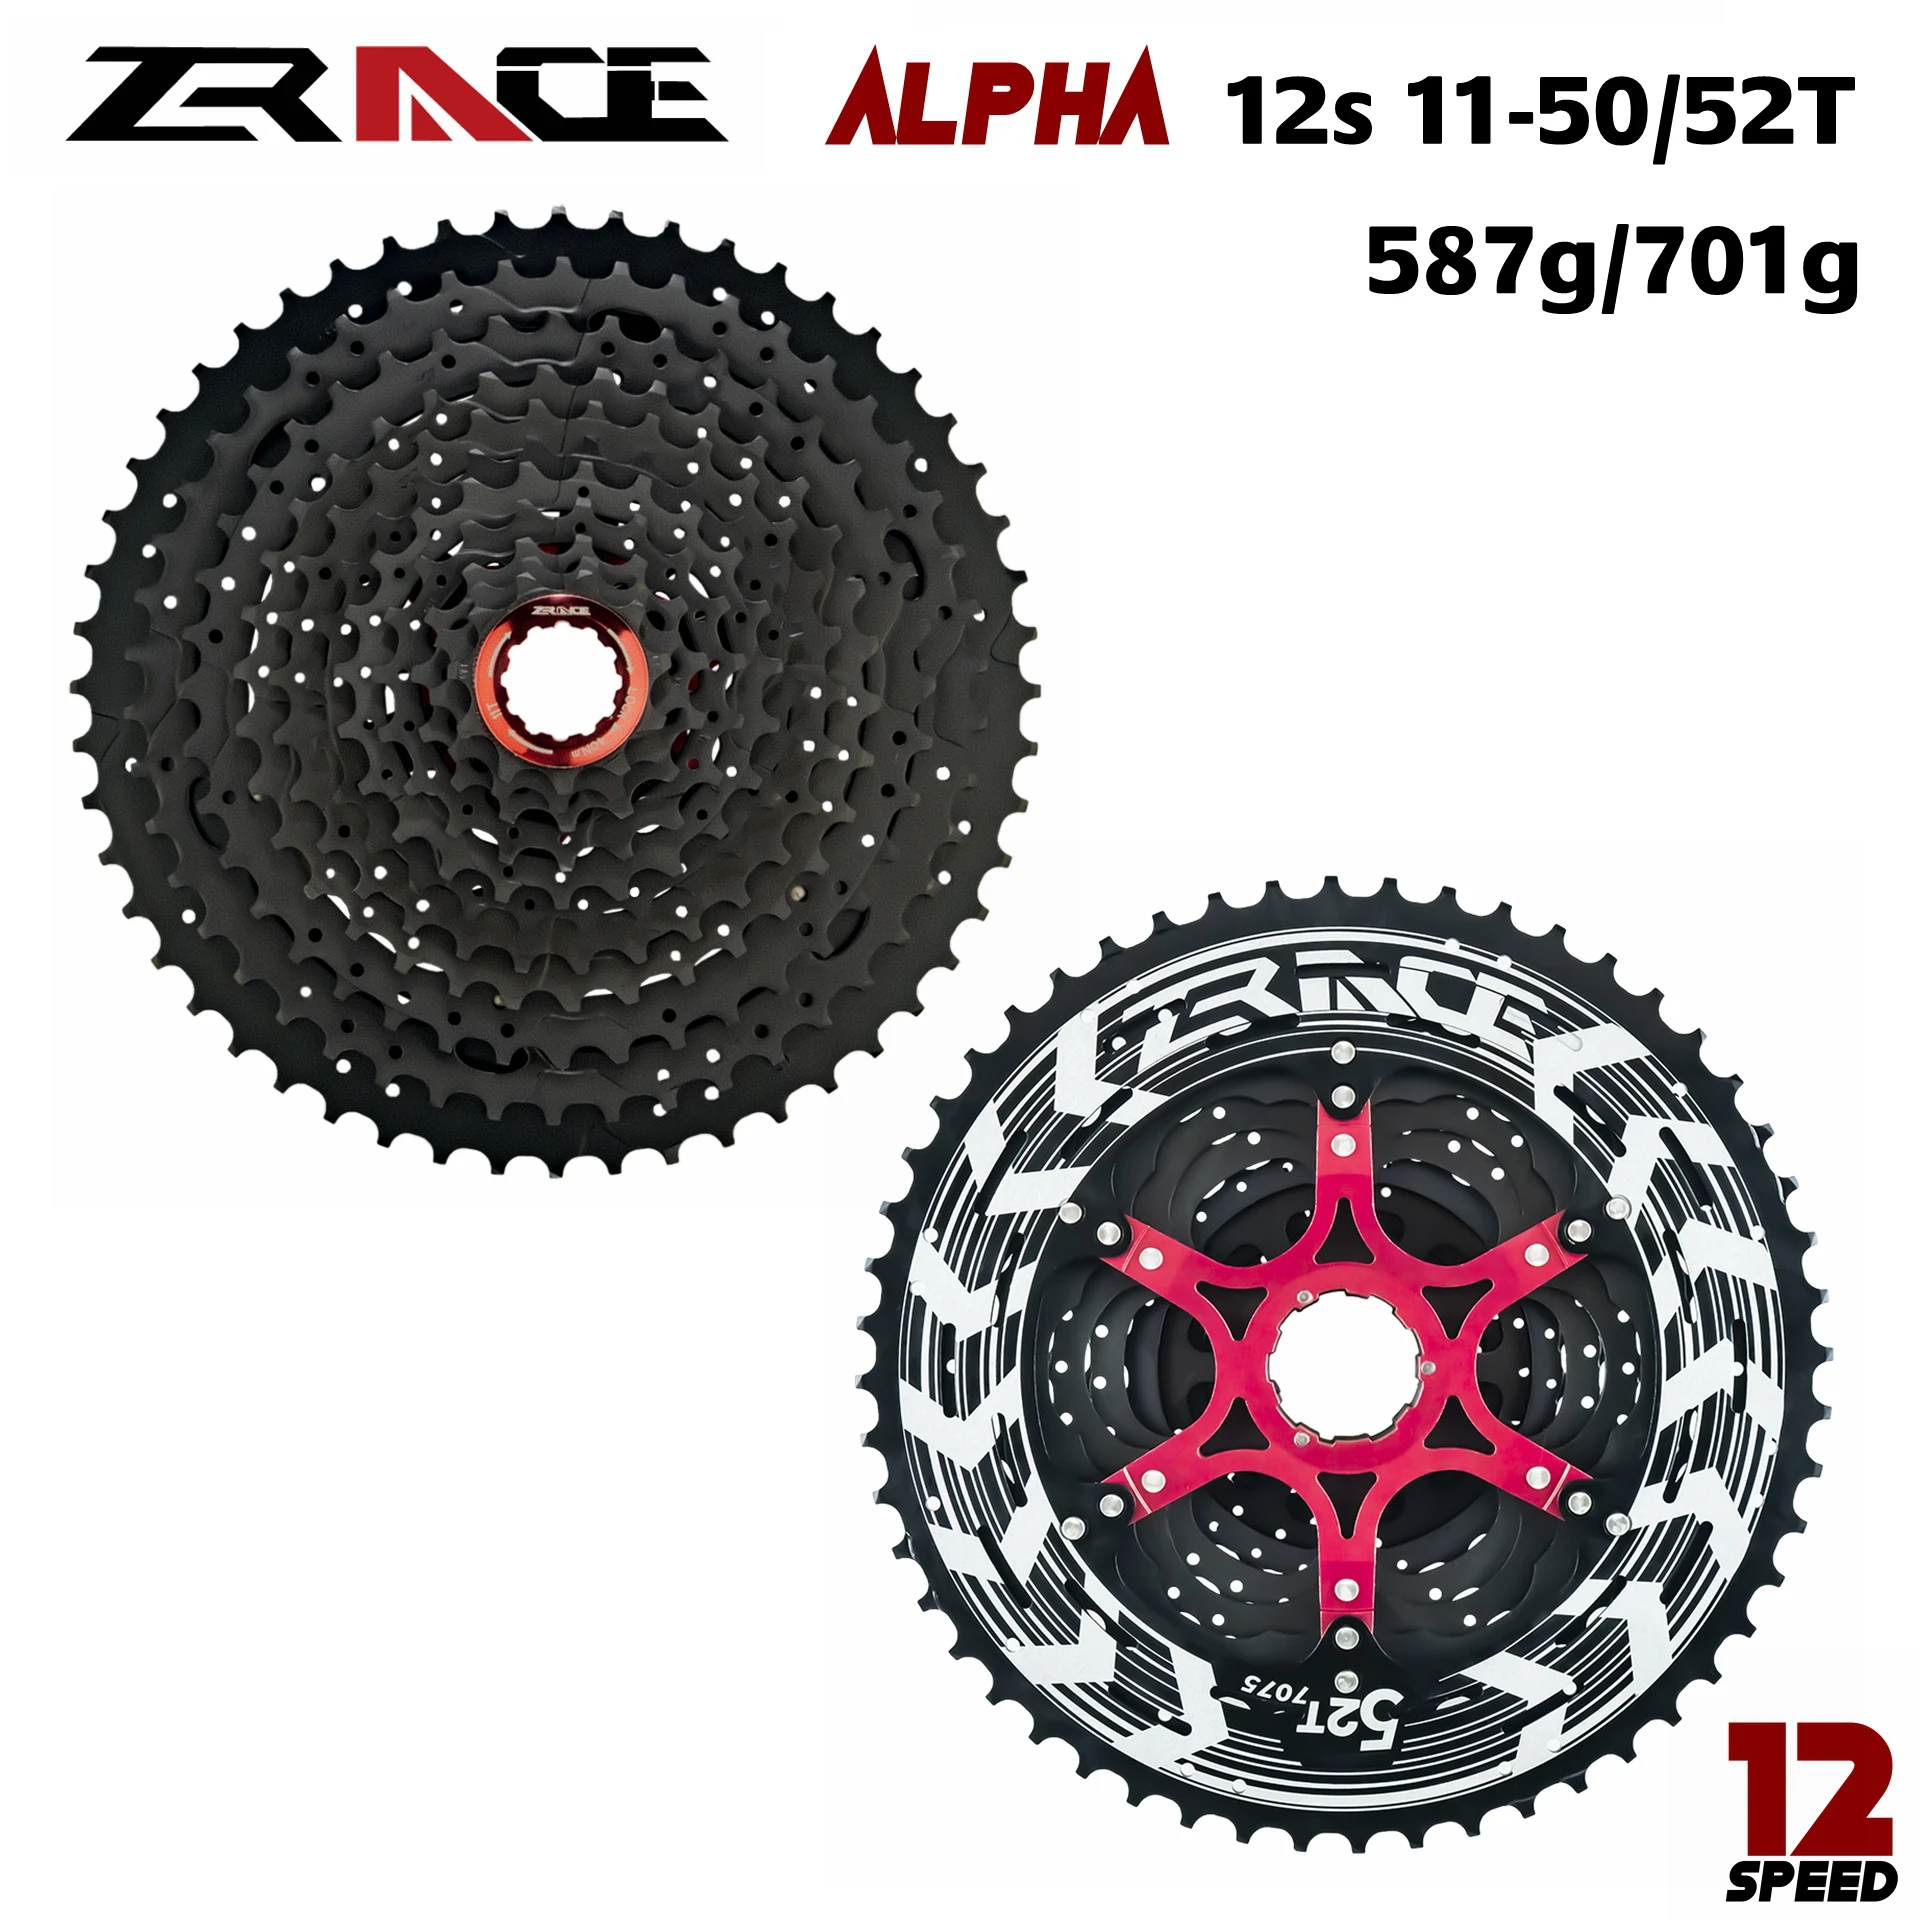 Легкая кассета ZRACE Alpha 12 s, 12 Скоростей, для горного велосипеда 11-50T / 11-52T - Black, совместимая с M9100 / XX1 X01 GX NX Eagle от AliExpress RU&CIS NEW